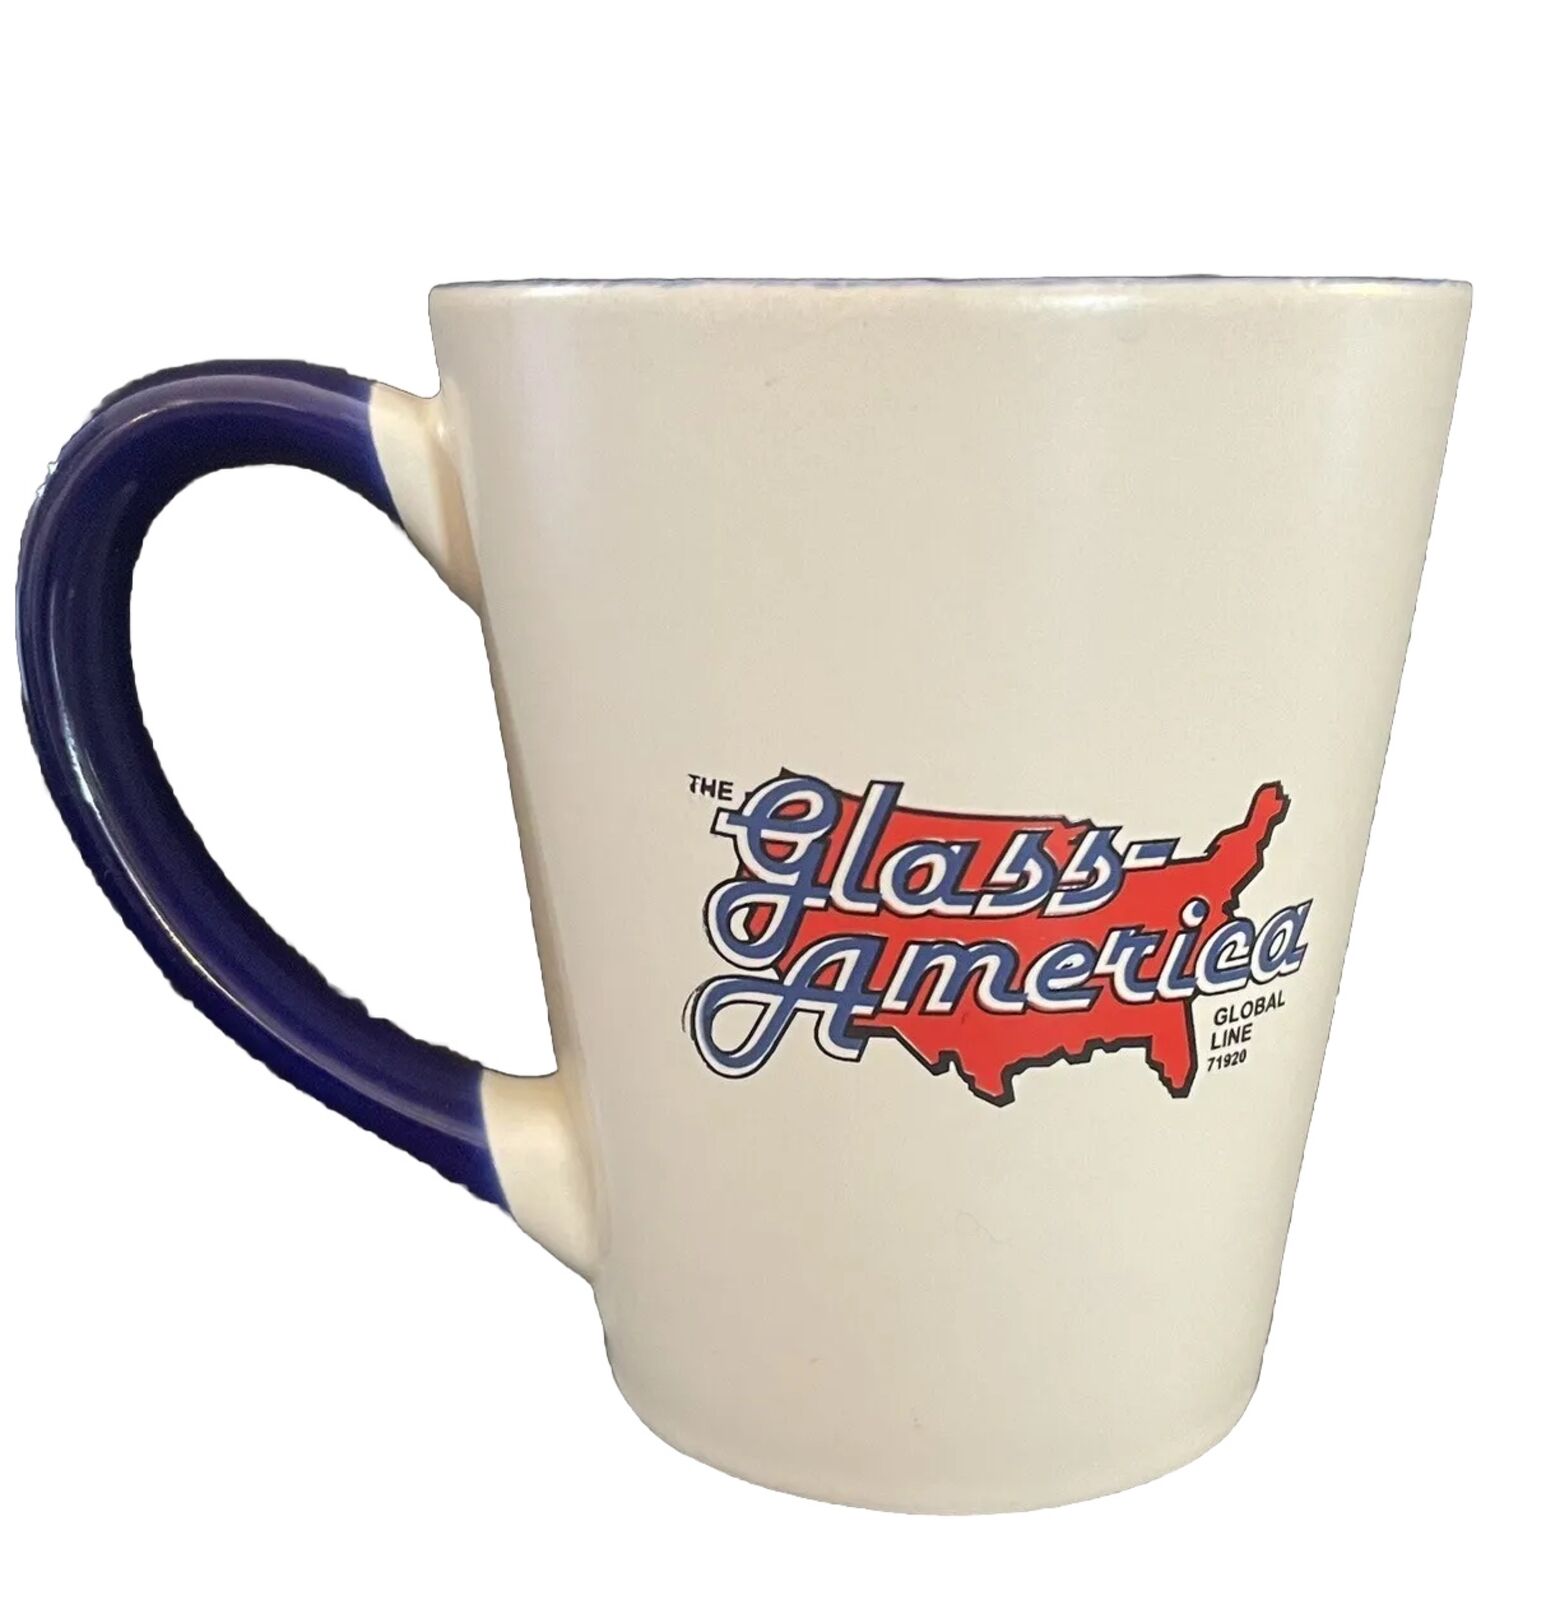 The Glass Of America Coffee Cup Advertising Mug